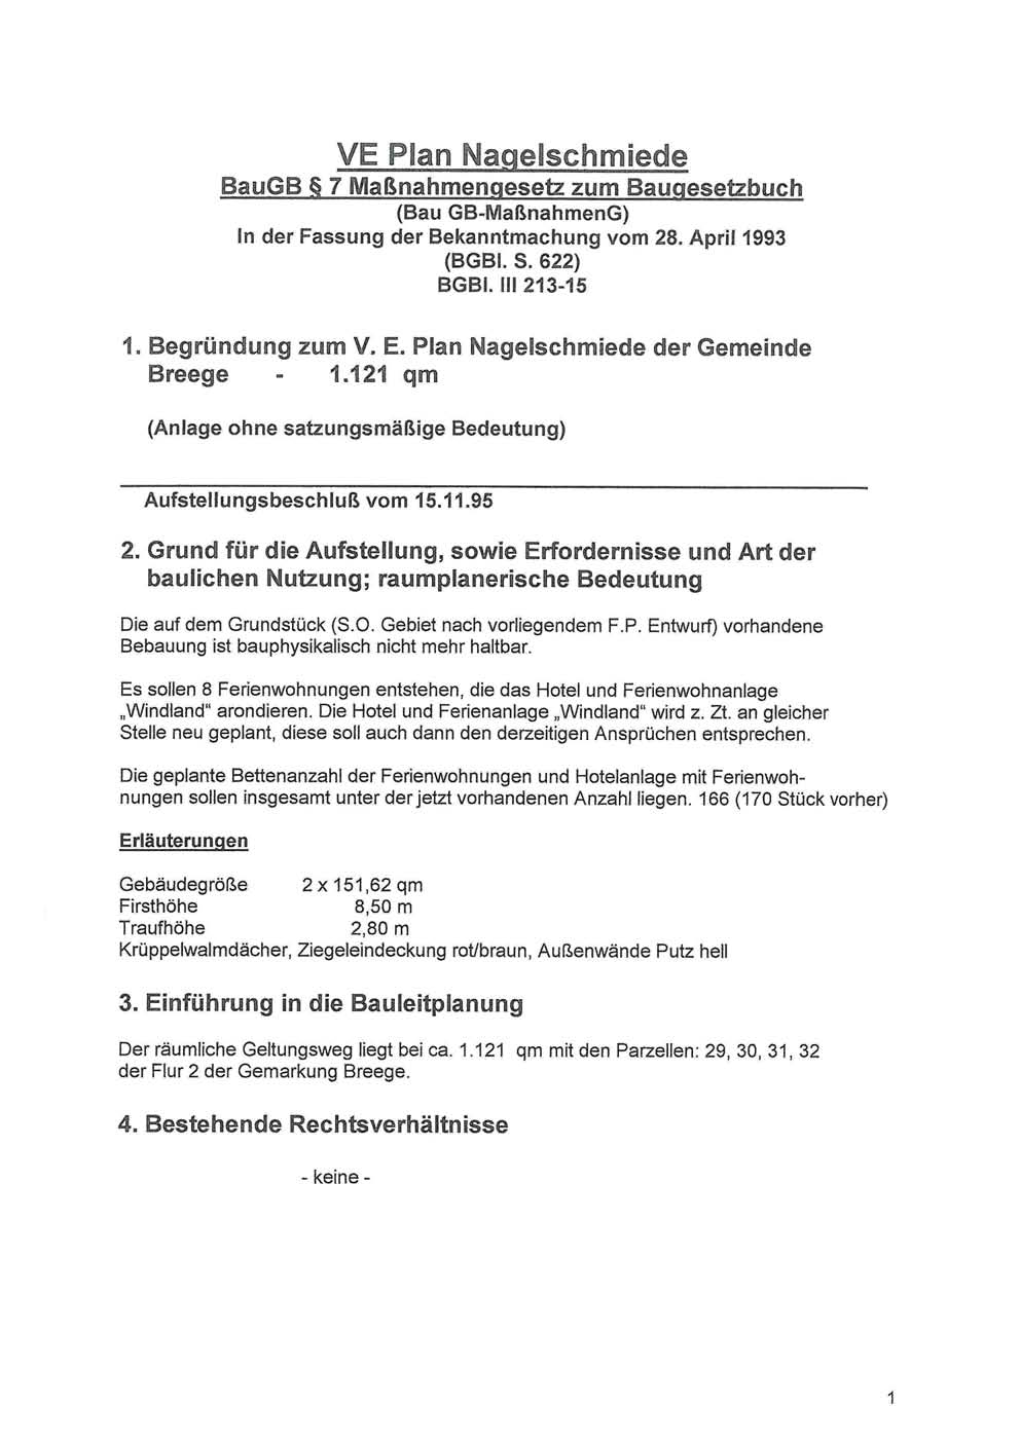 VE Plan Naqelschmiede Baugb § 7 Maßnahmenqesetz Zum Bauqesetzbucl (Bau GB-Maßnahmeng) in Der Fassung Der Bekanntmachung Vom 28